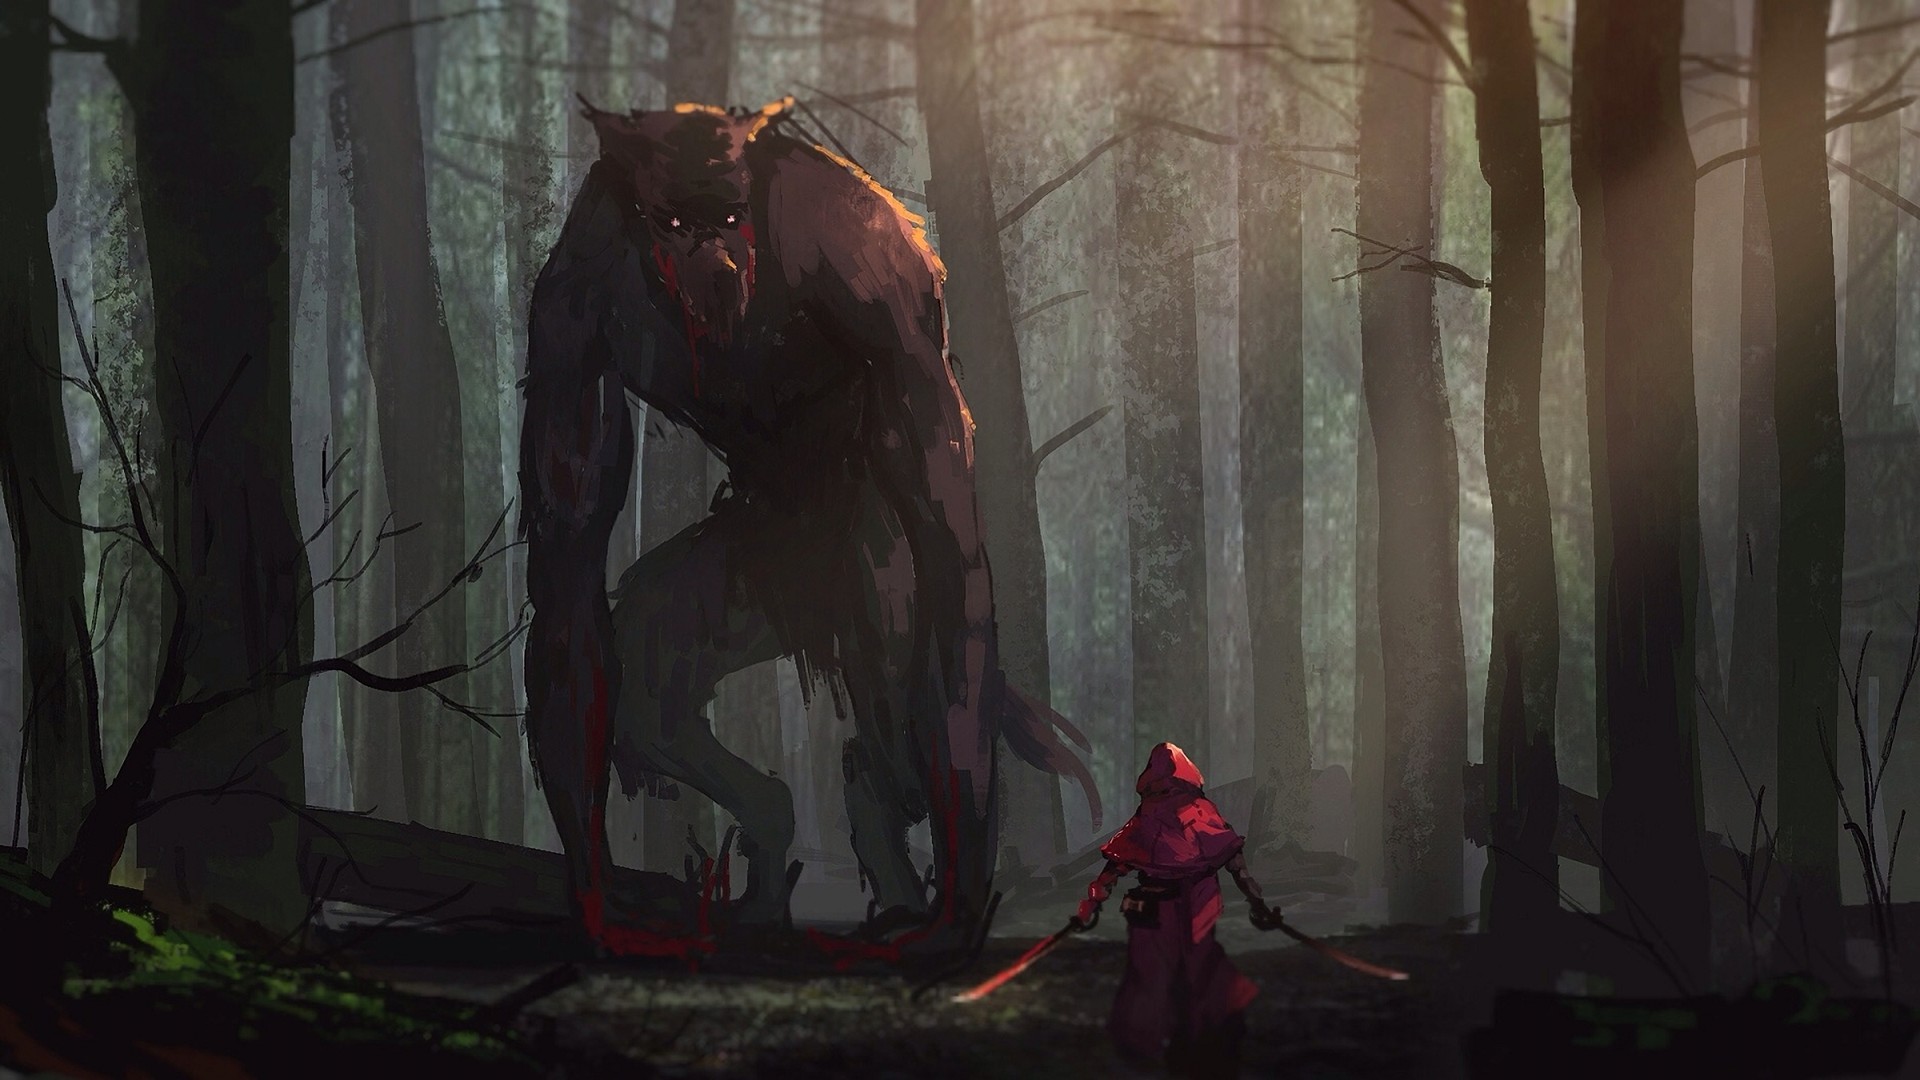 Little Red Riding Hood Werewolves Sword Wood Hoods Trees Weapon